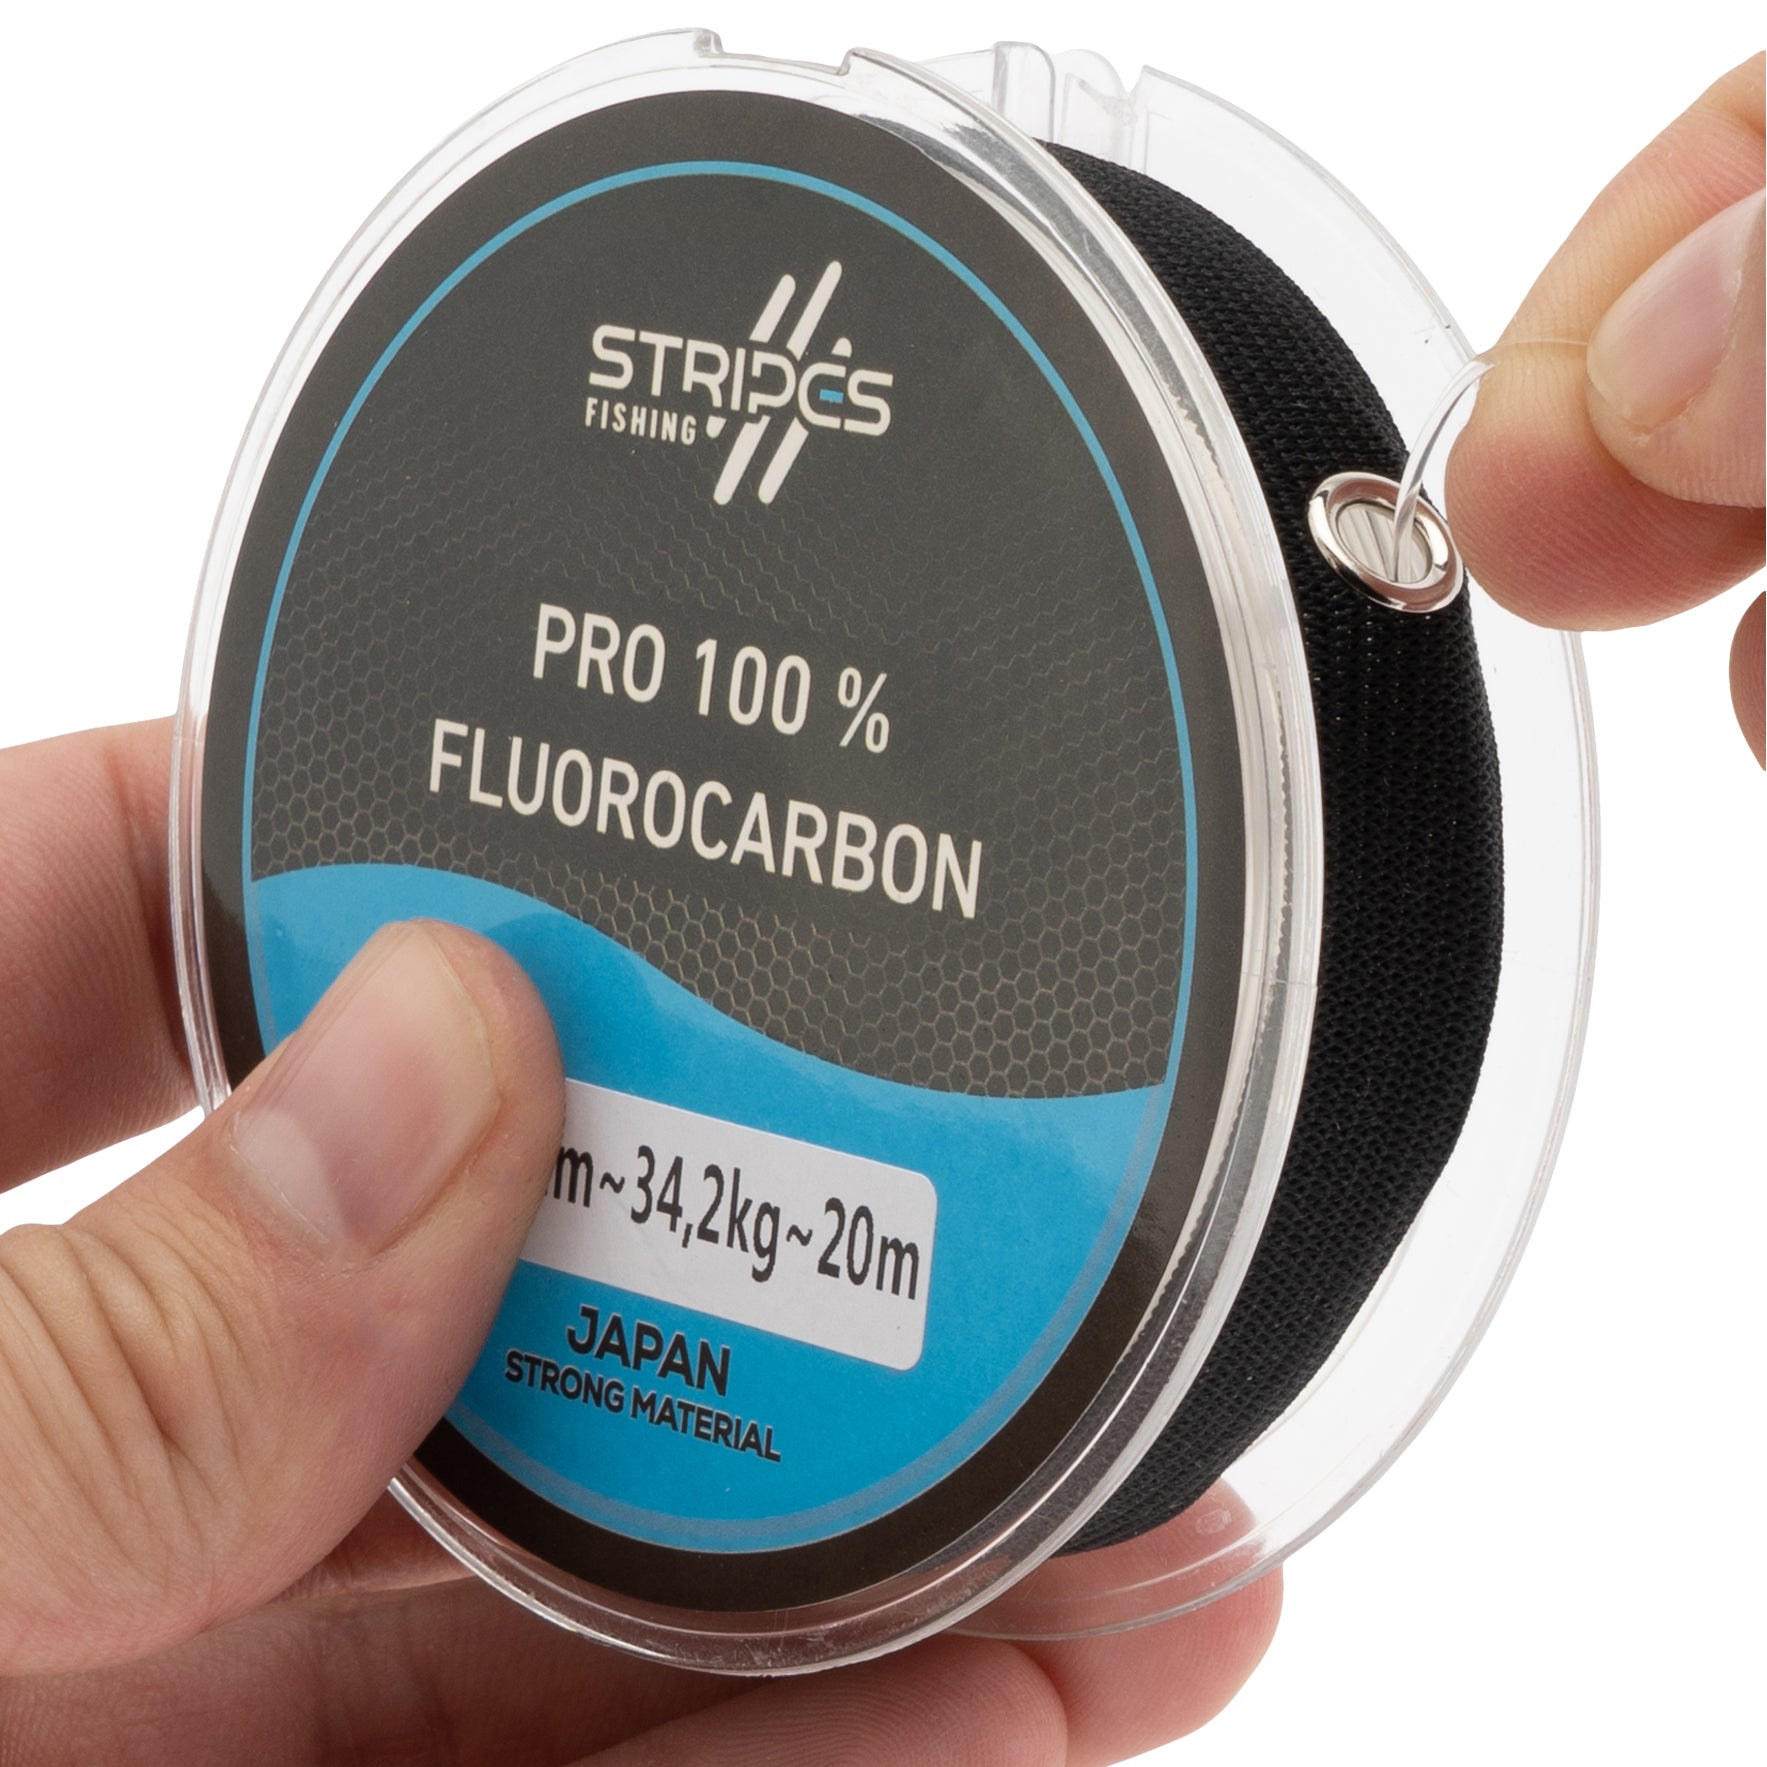 Stripes Pro 100% Fluorocarbon